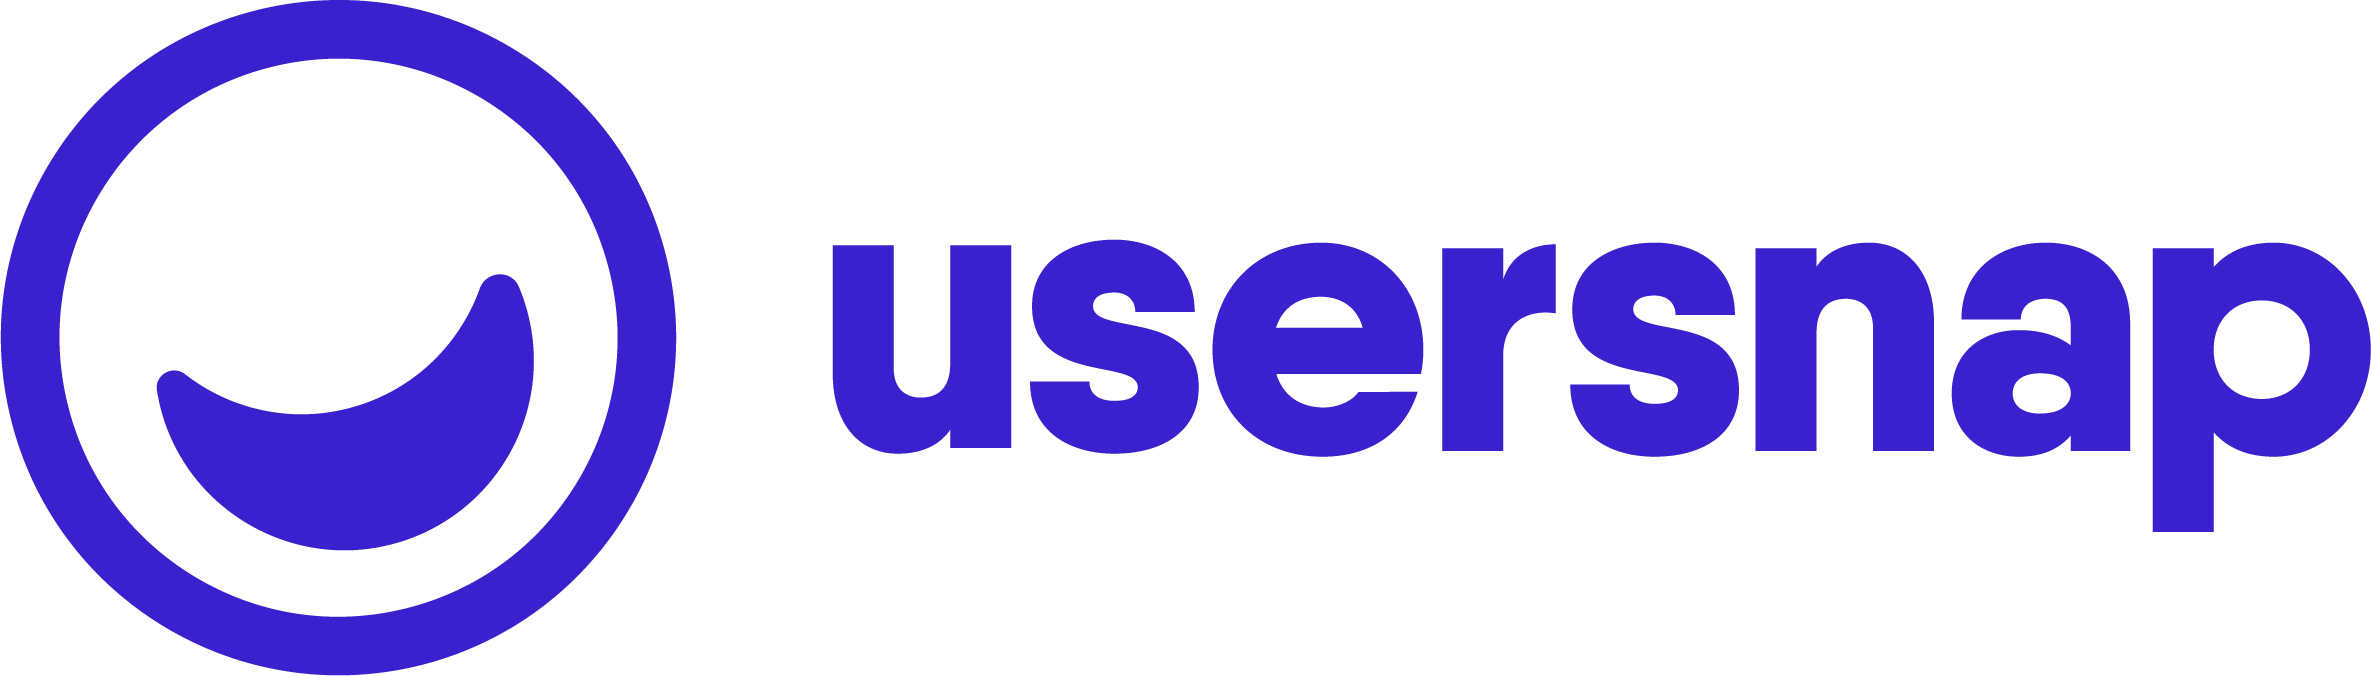 Usersnap logo for Pivotal Tracker integration